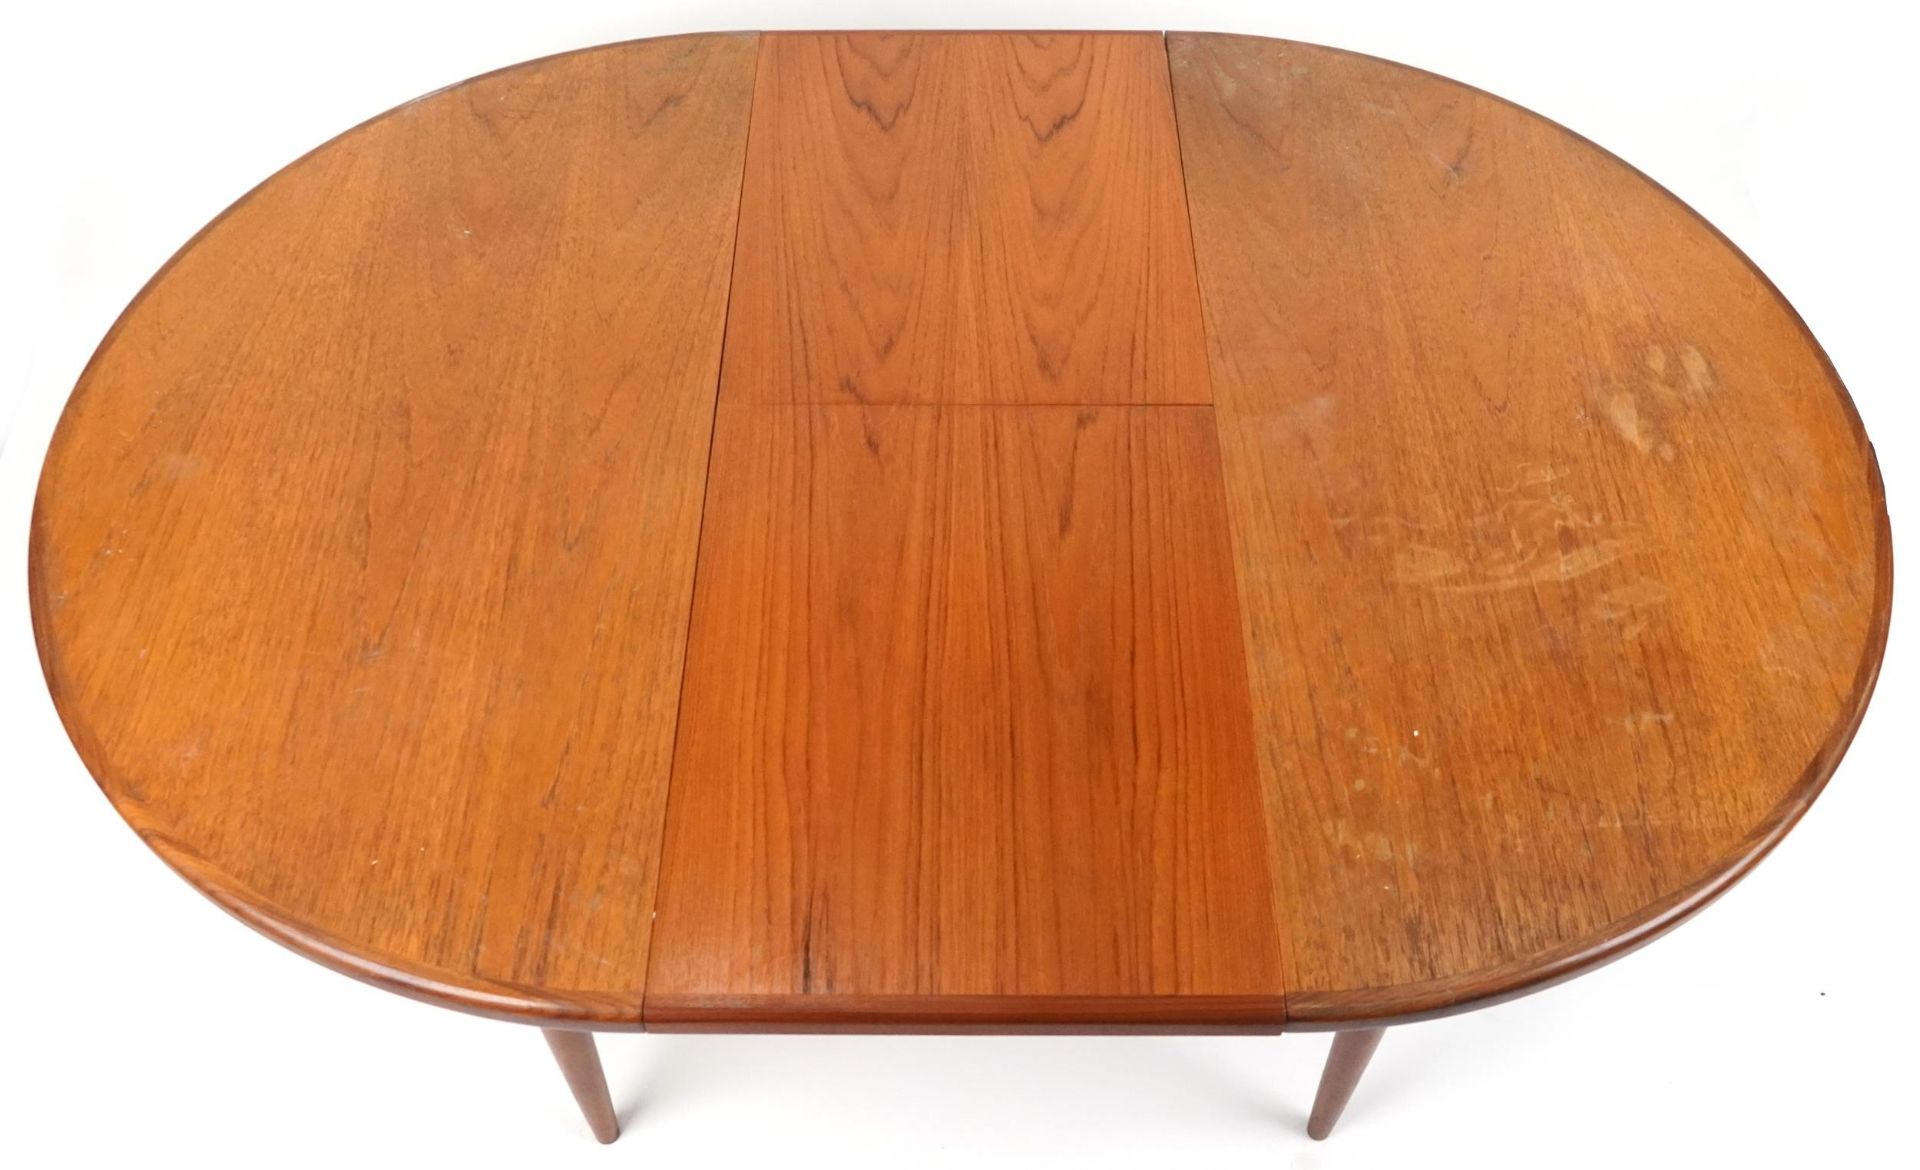 G Plan, mid century teak Fresco extending dining table, 73cm high x 121cm in diameter when closed - Image 2 of 5